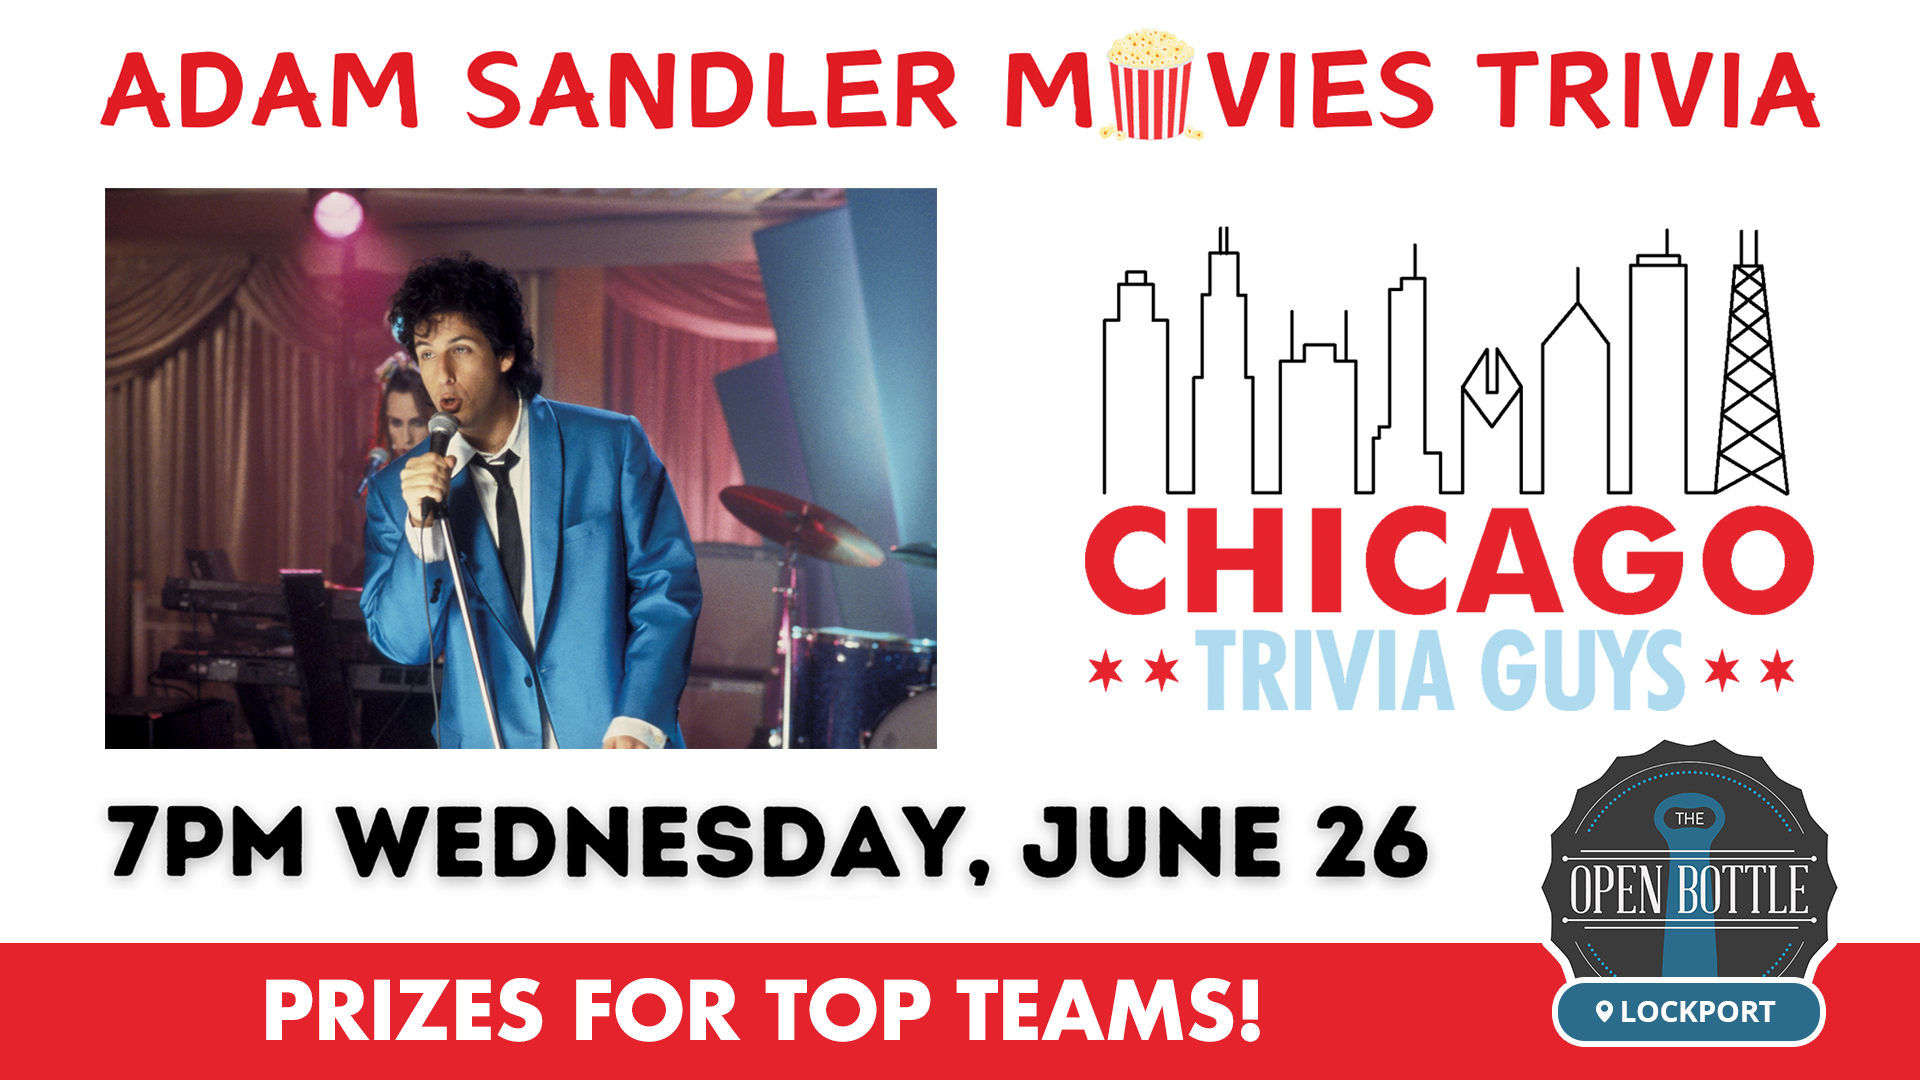 Event: Adam Sandler Movies Trivia with Chicago Trivia Guys